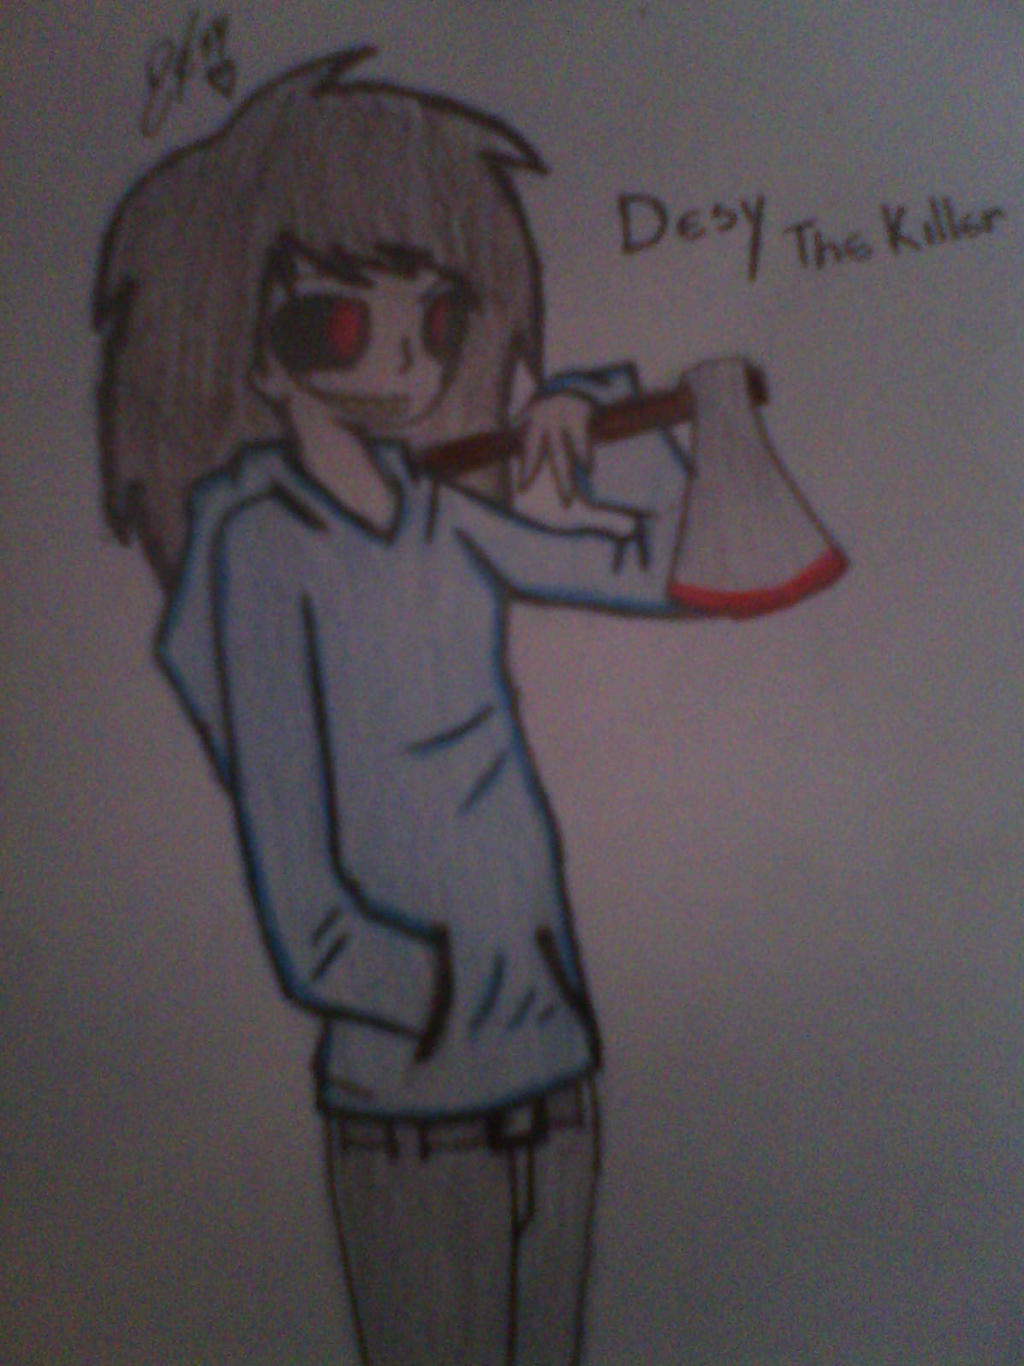 Desy the killer vs JEff the killer by Desy017 on DeviantArt